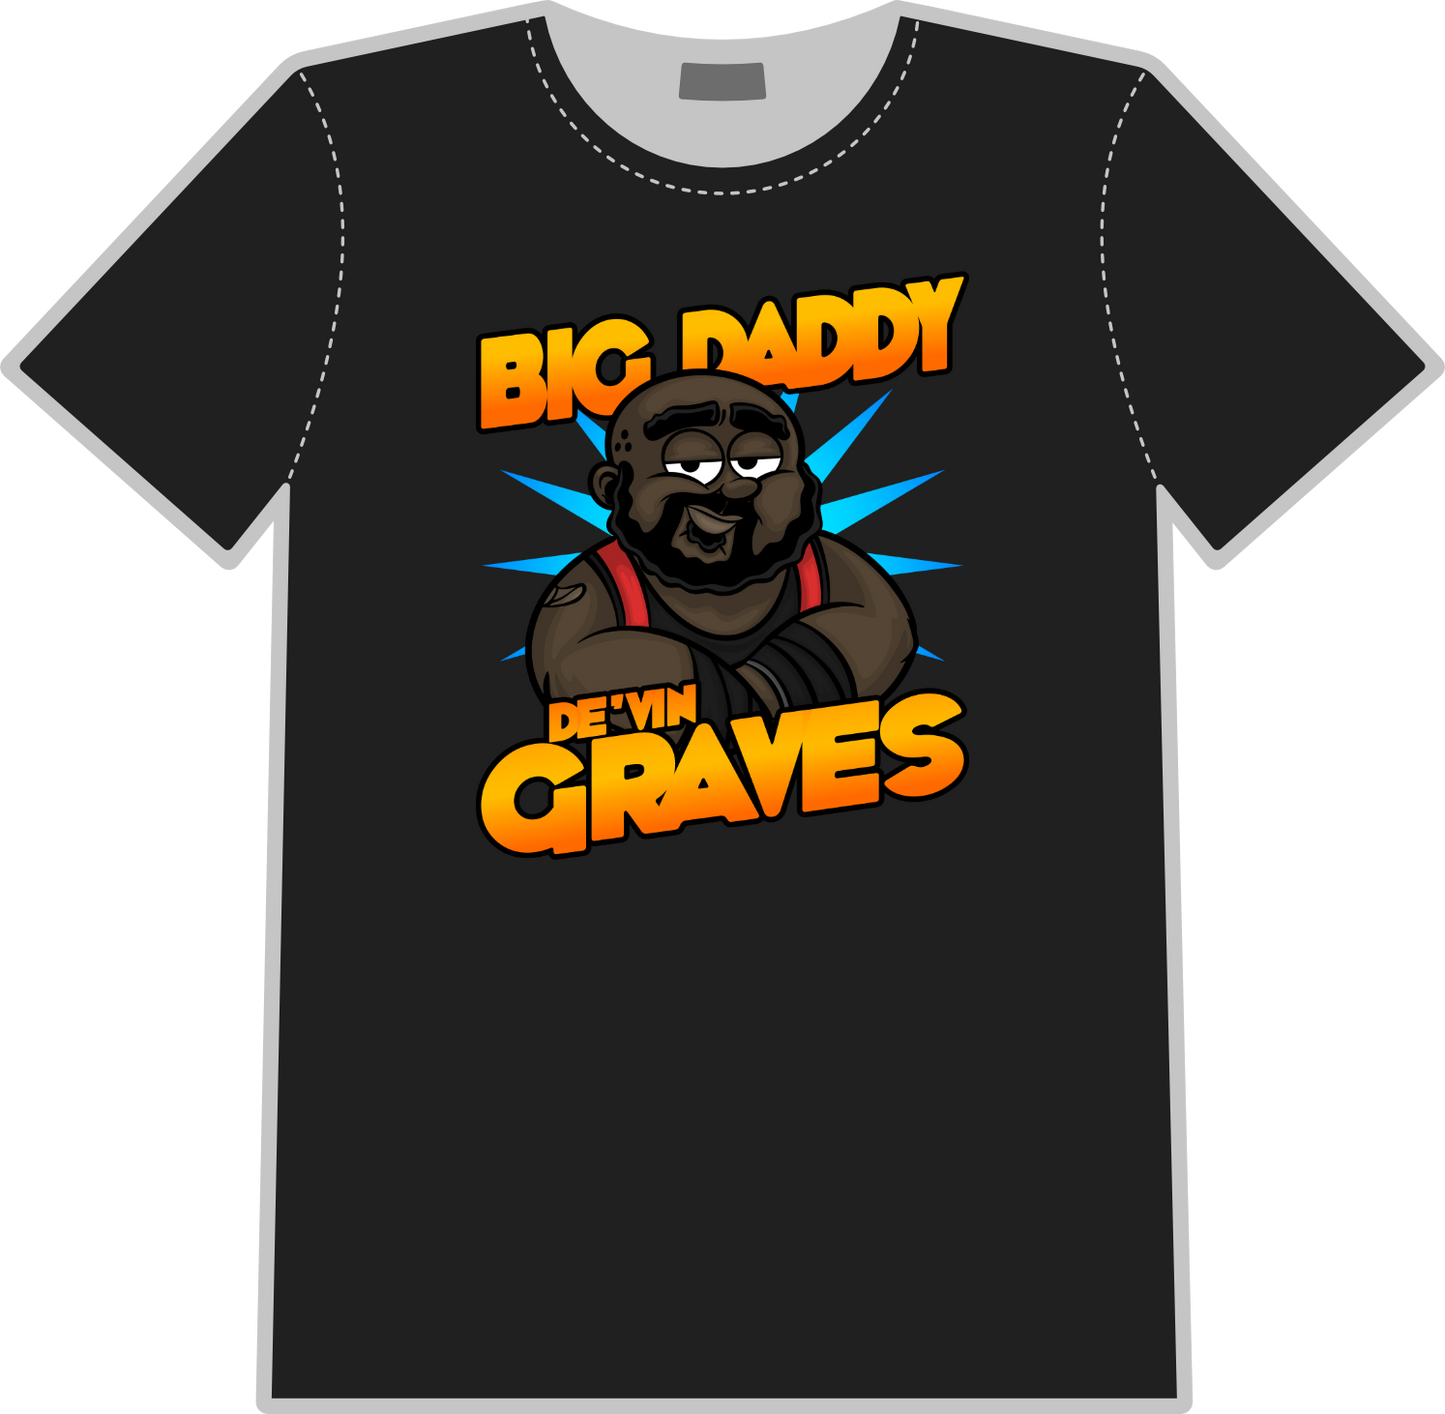 Big Daddy Graves (T-Shirt)